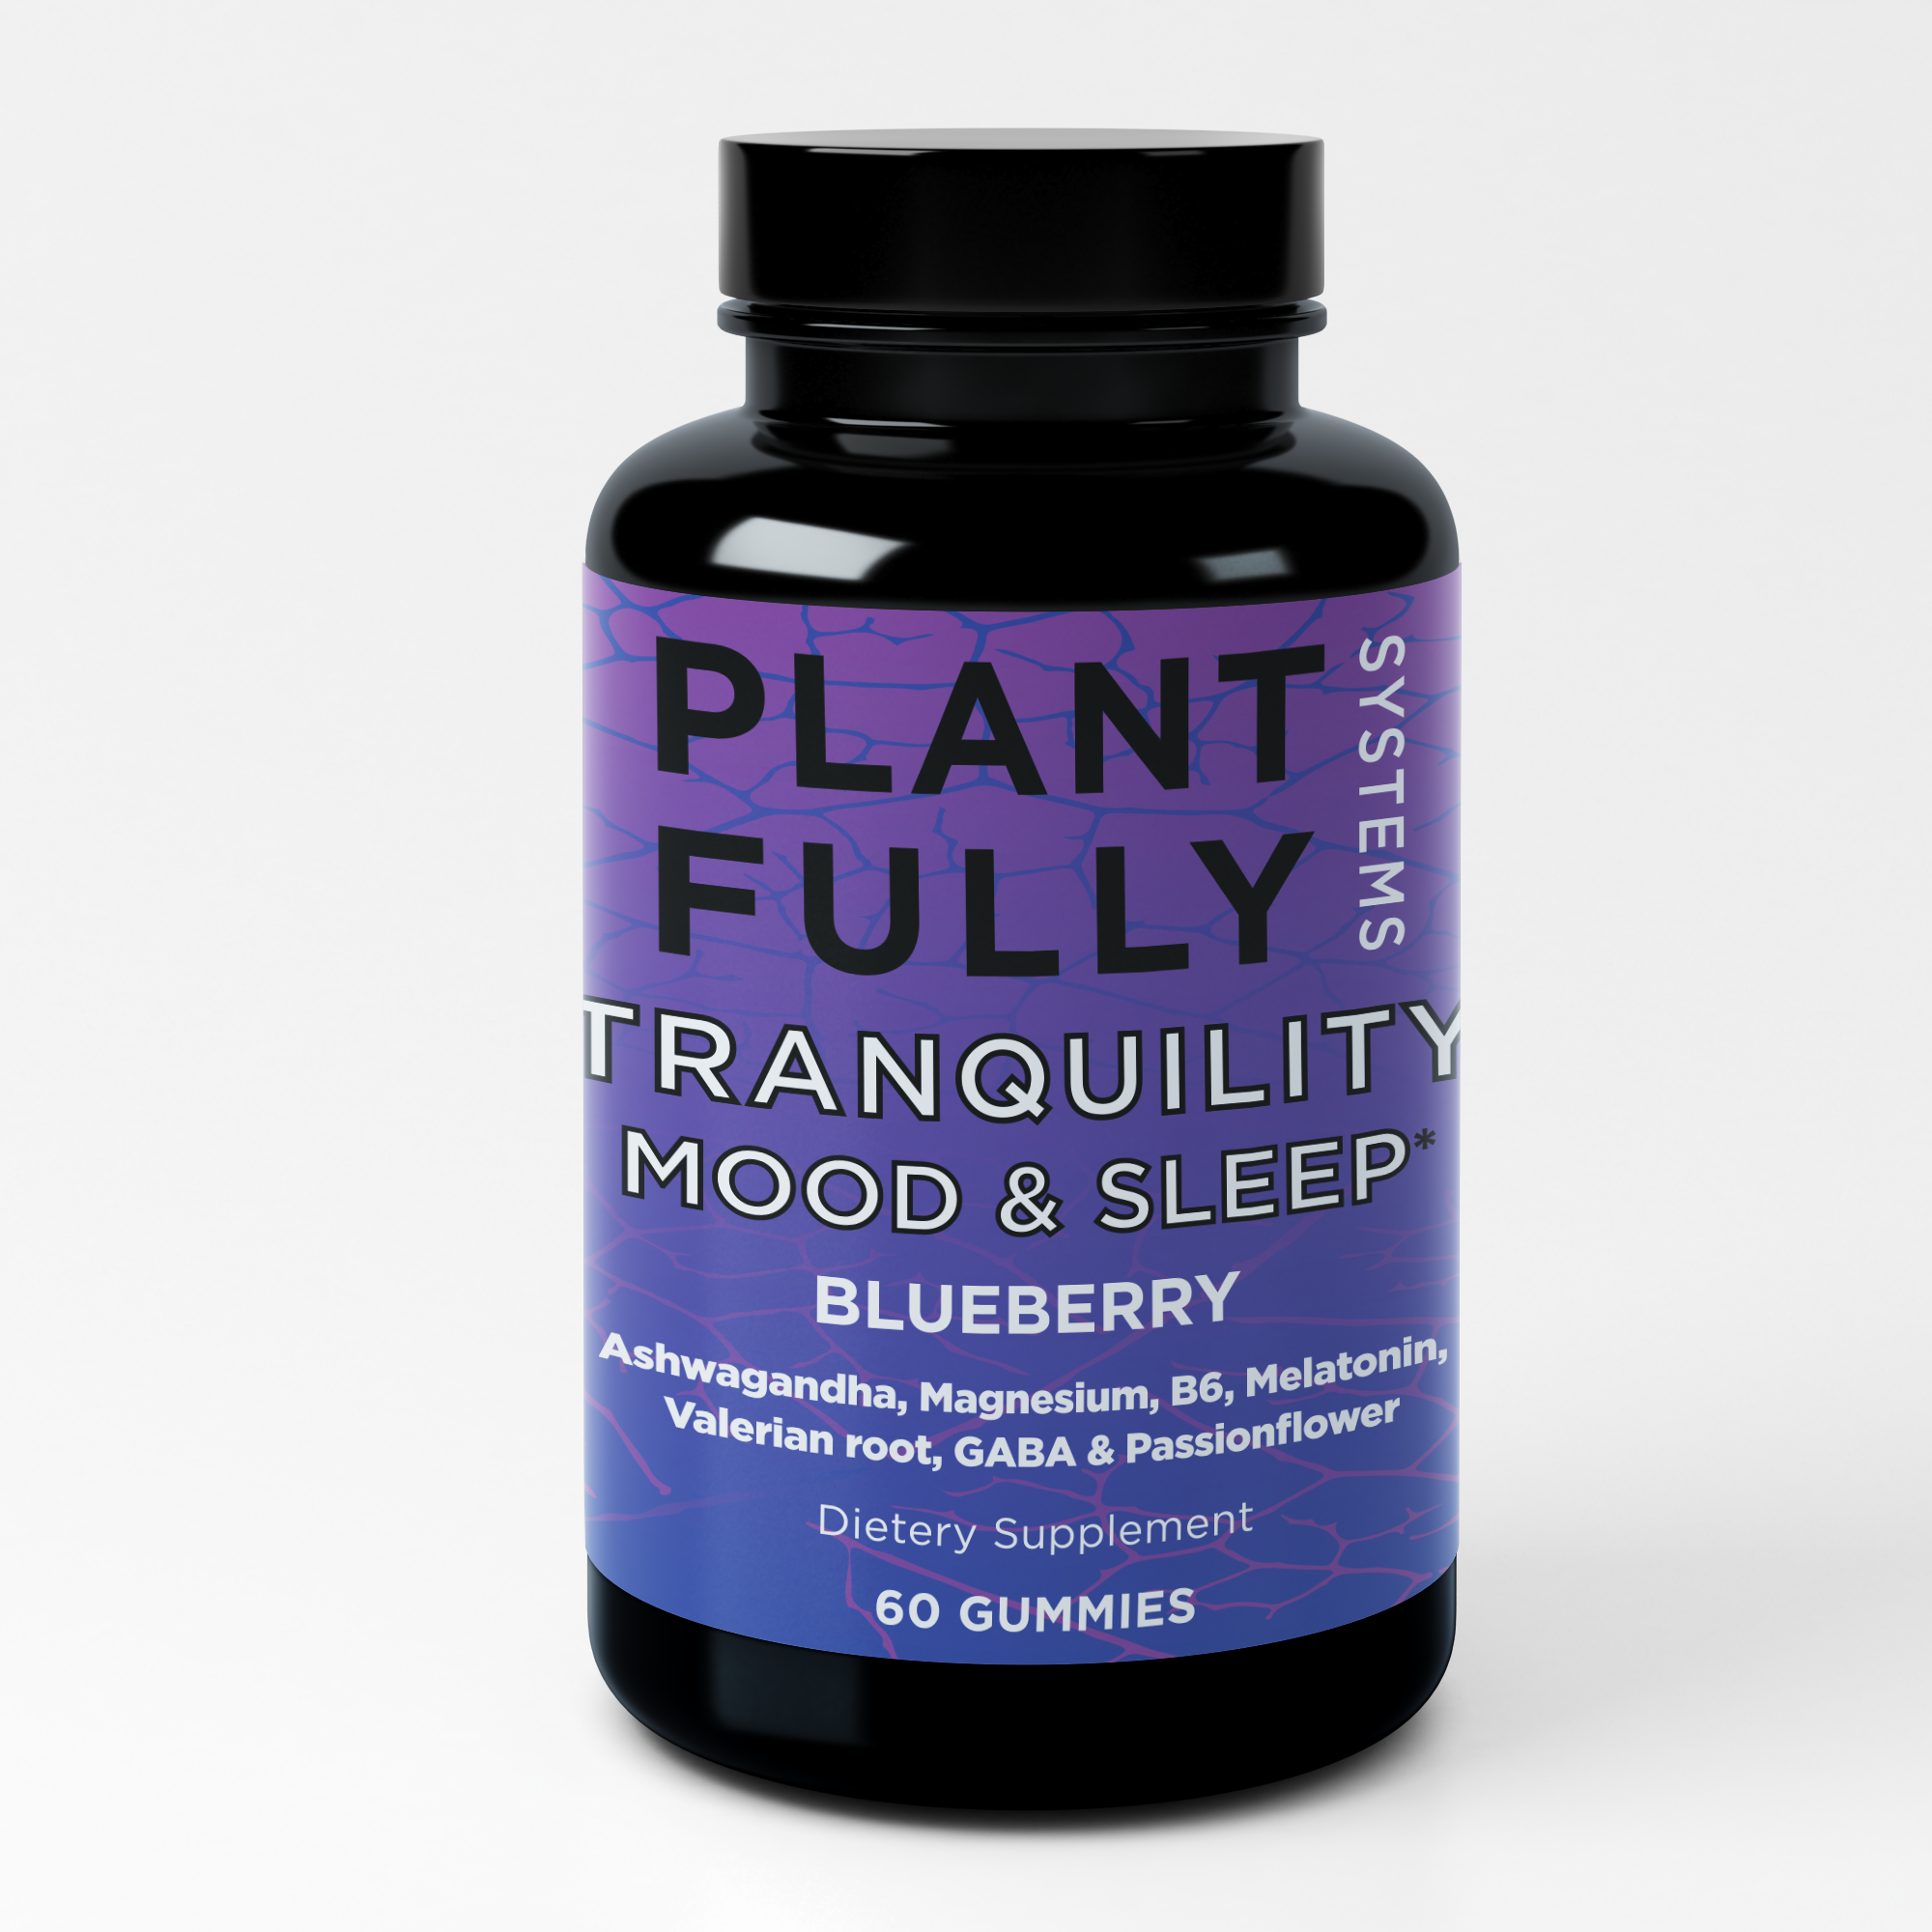 Tranquility - Mood & Sleep Formula